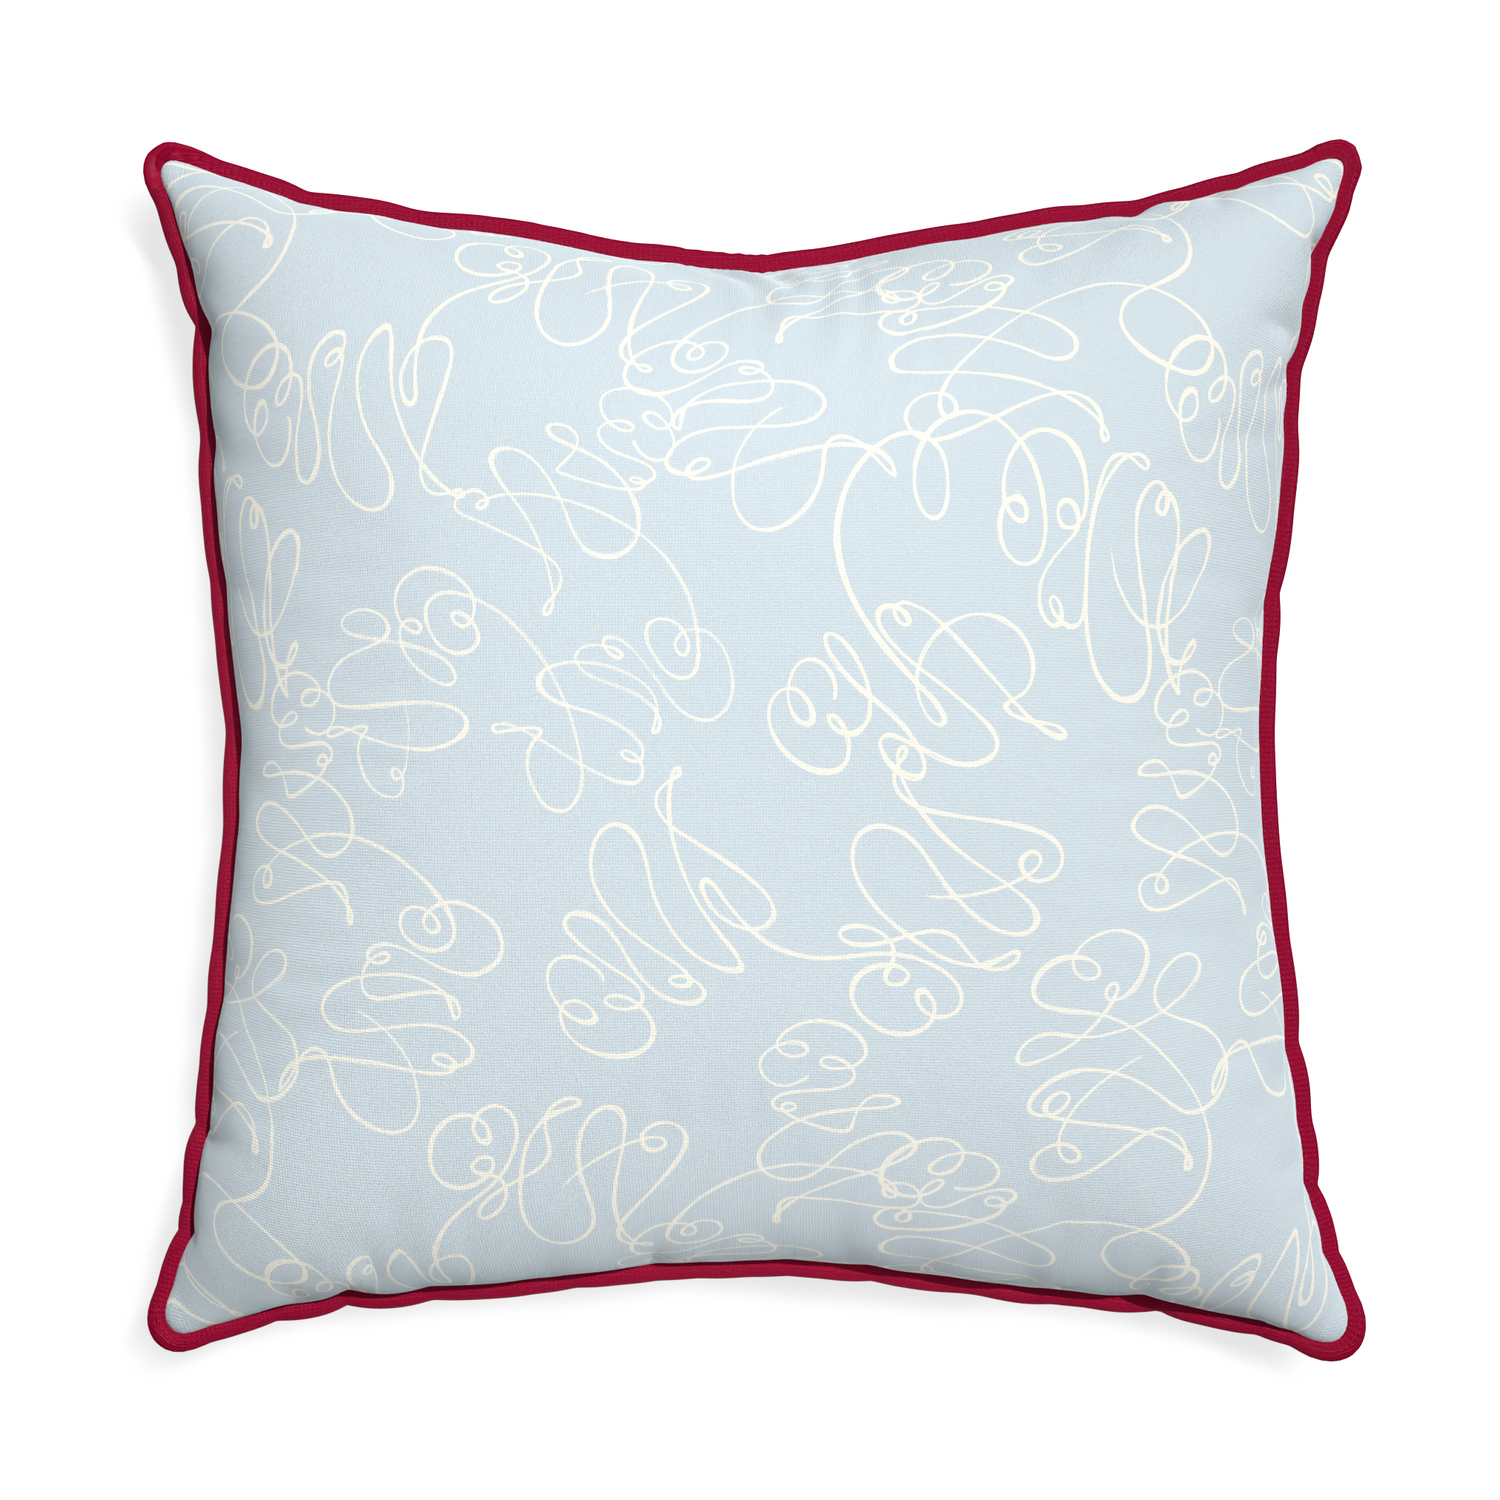 Euro-sham mirabella custom pillow with raspberry piping on white background